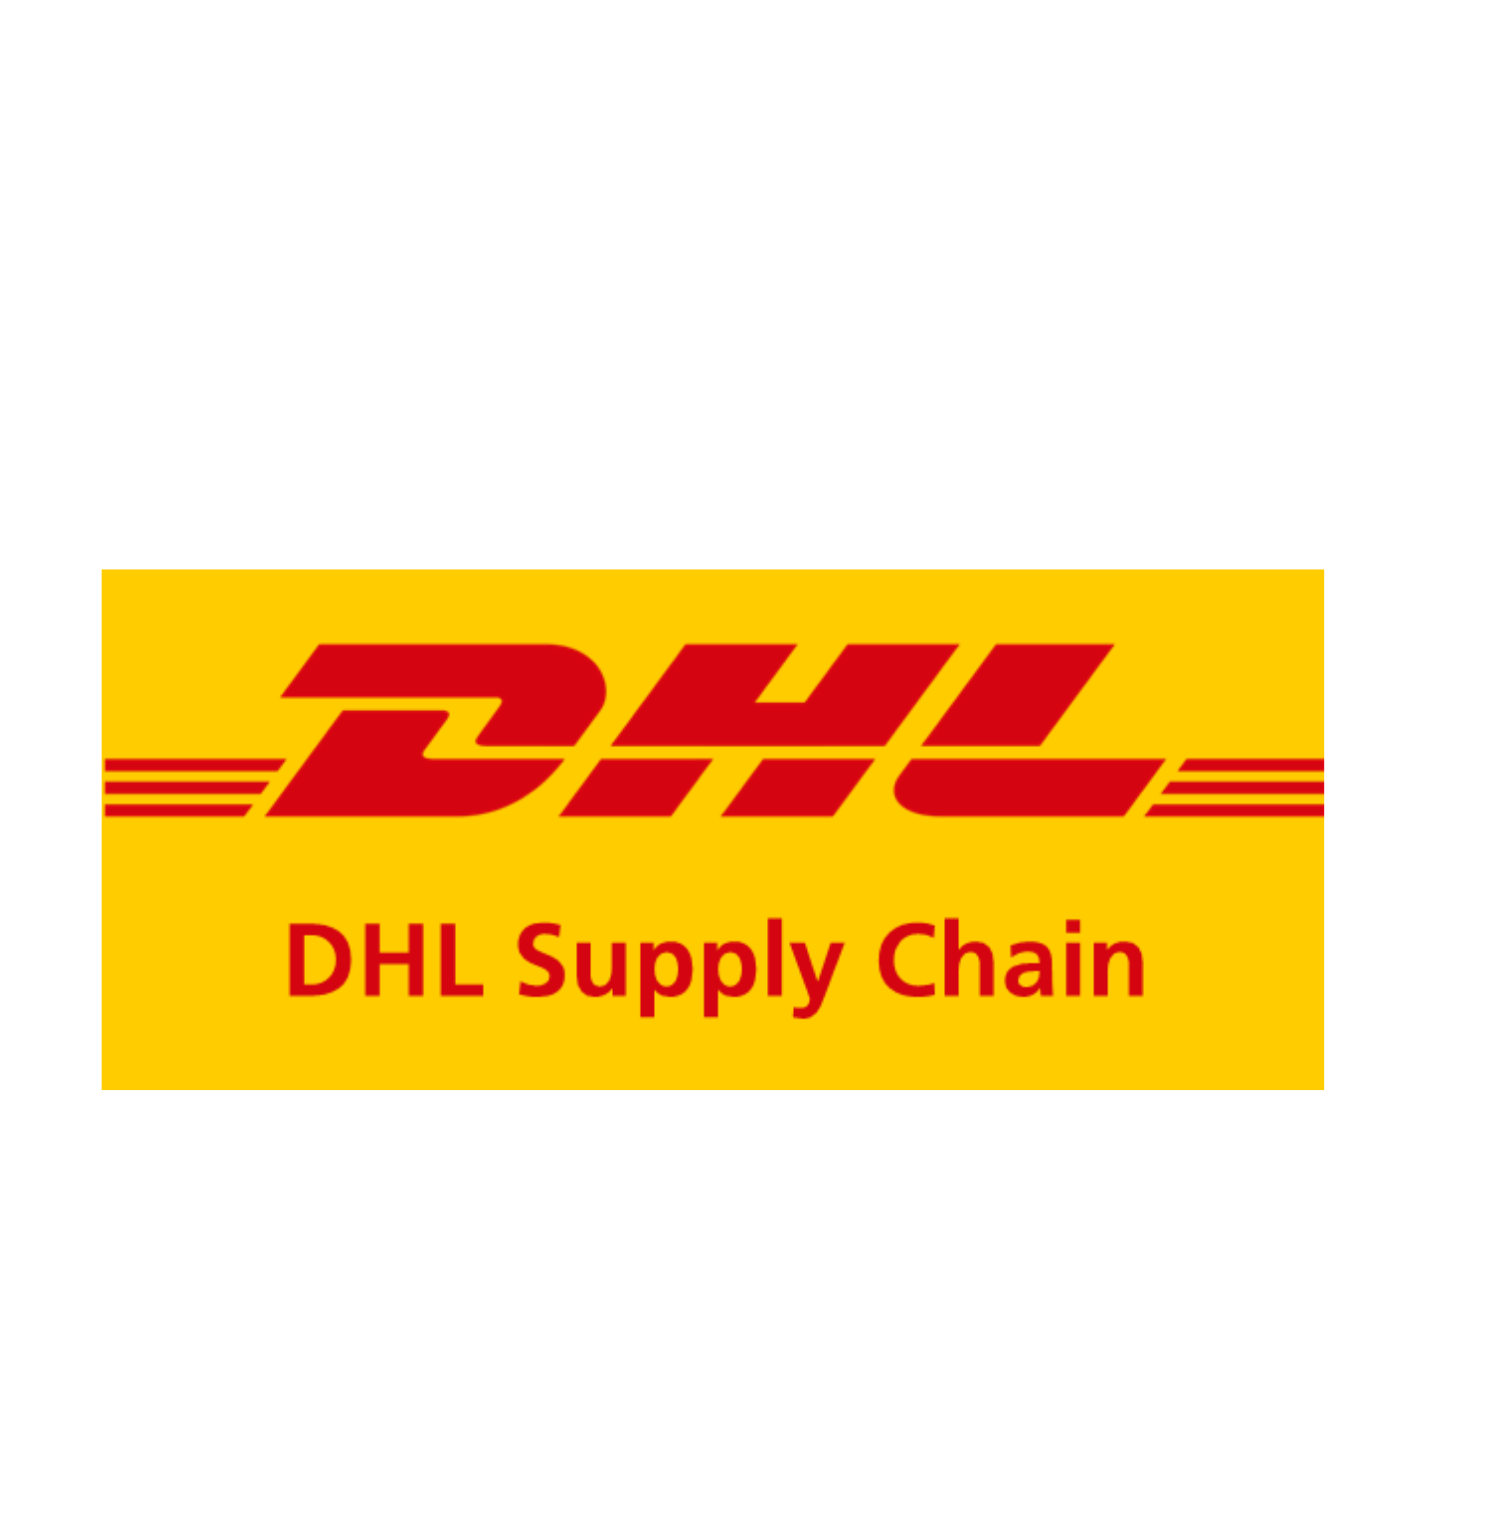 ENTERPRISE - DHL Supply Chain-1